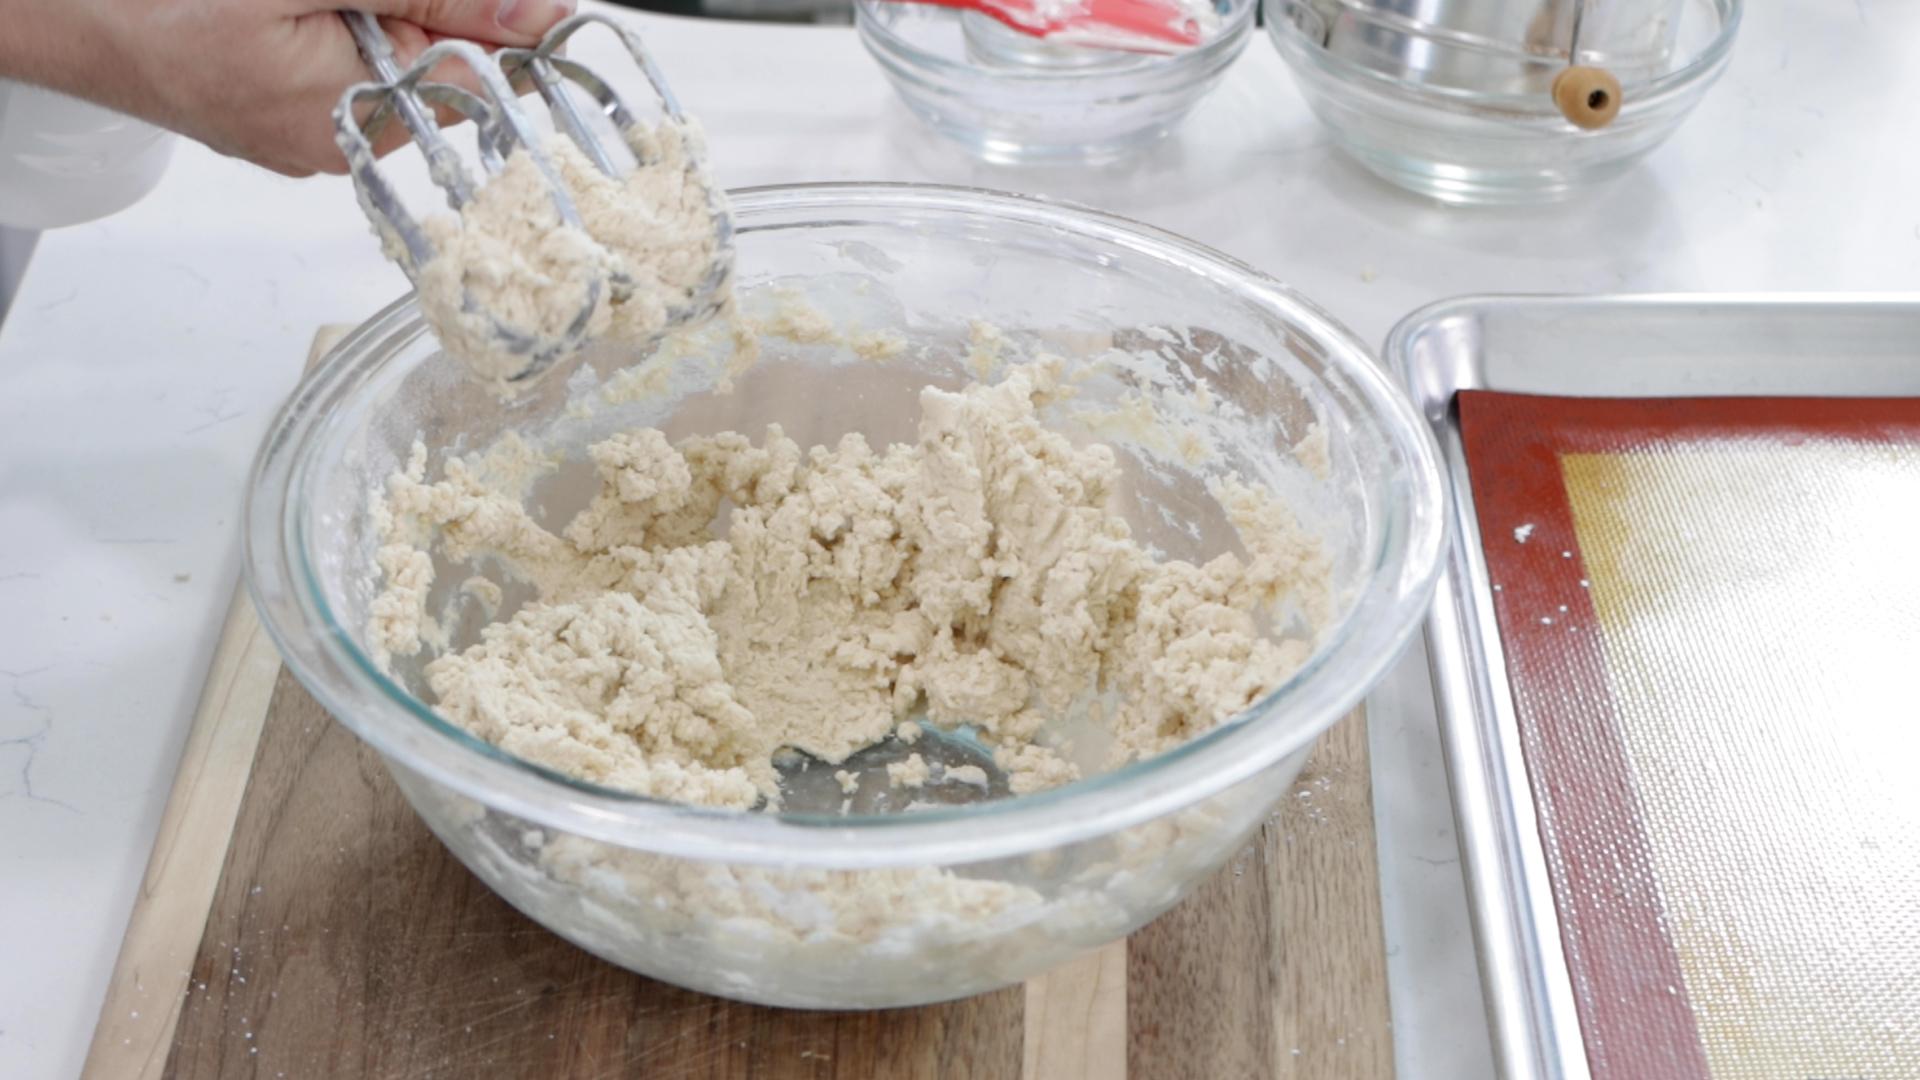 How To Make Danish Butter Cookies.00_03_26_19.Still004.jpg